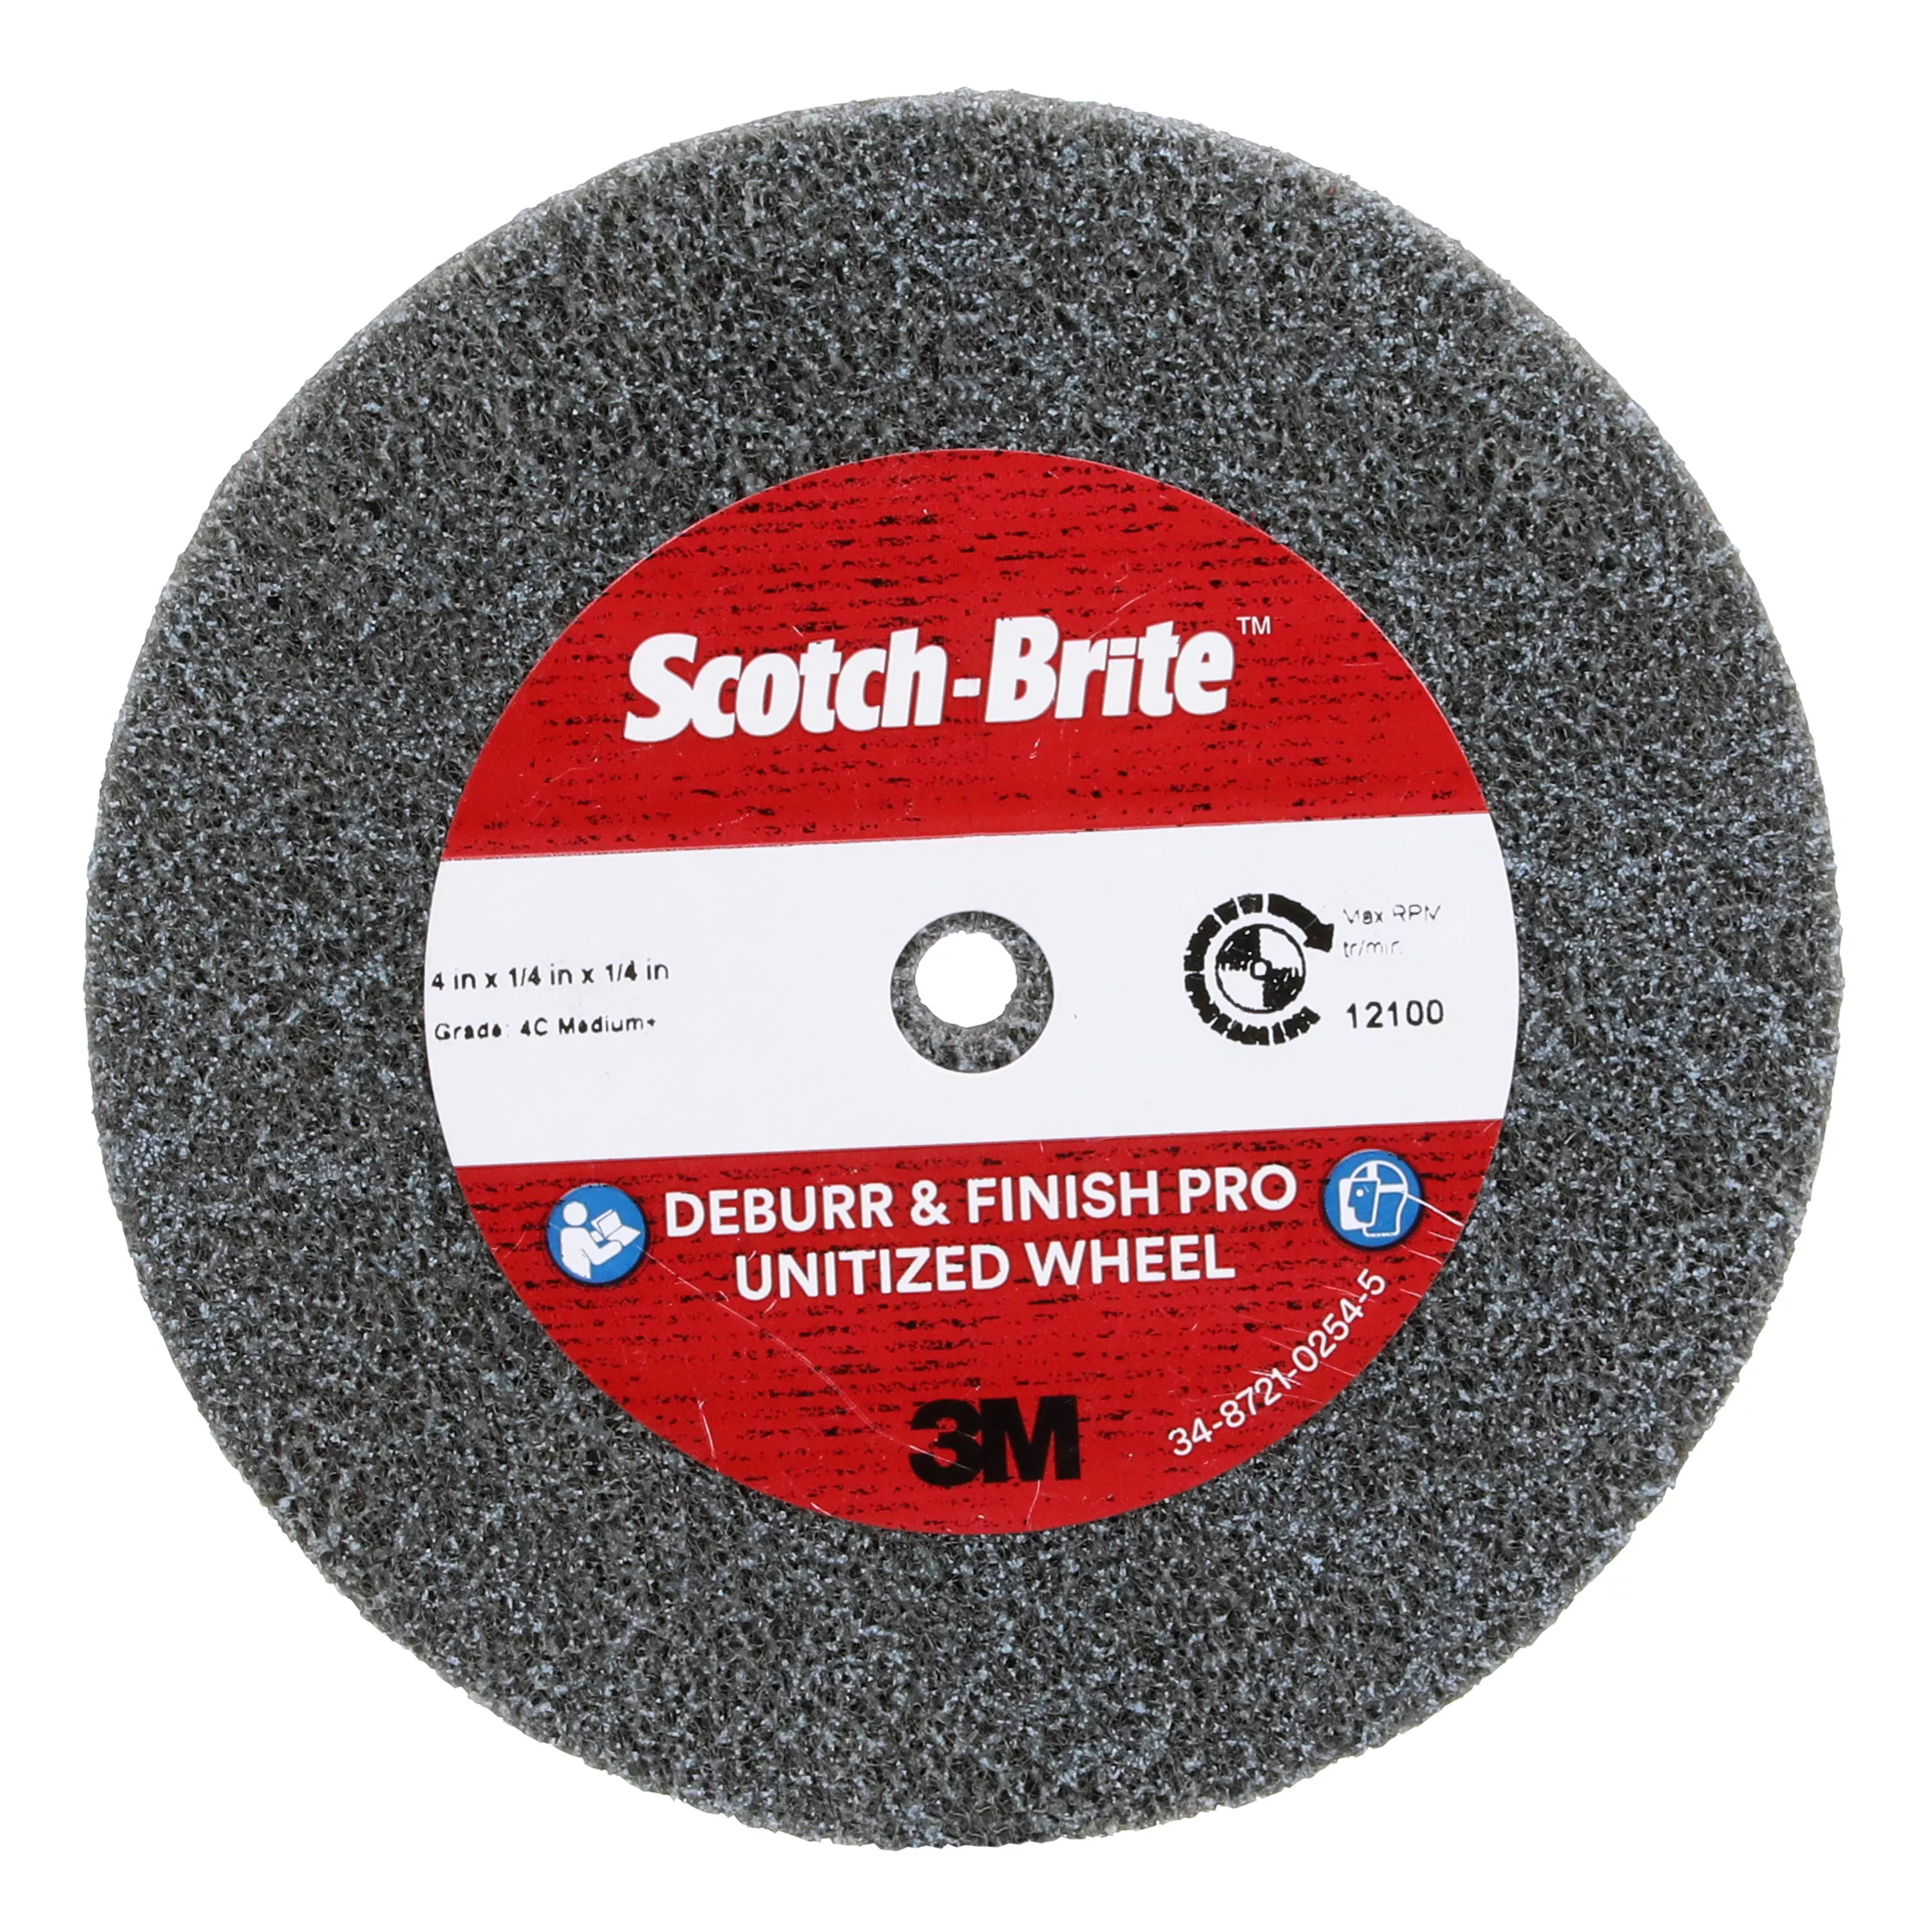 Scotch-Brite™ Deburr & Finish Pro Unitized Wheel, DP-UW, 4C Medium+, 4
in x 1/4 in x 1/4 in